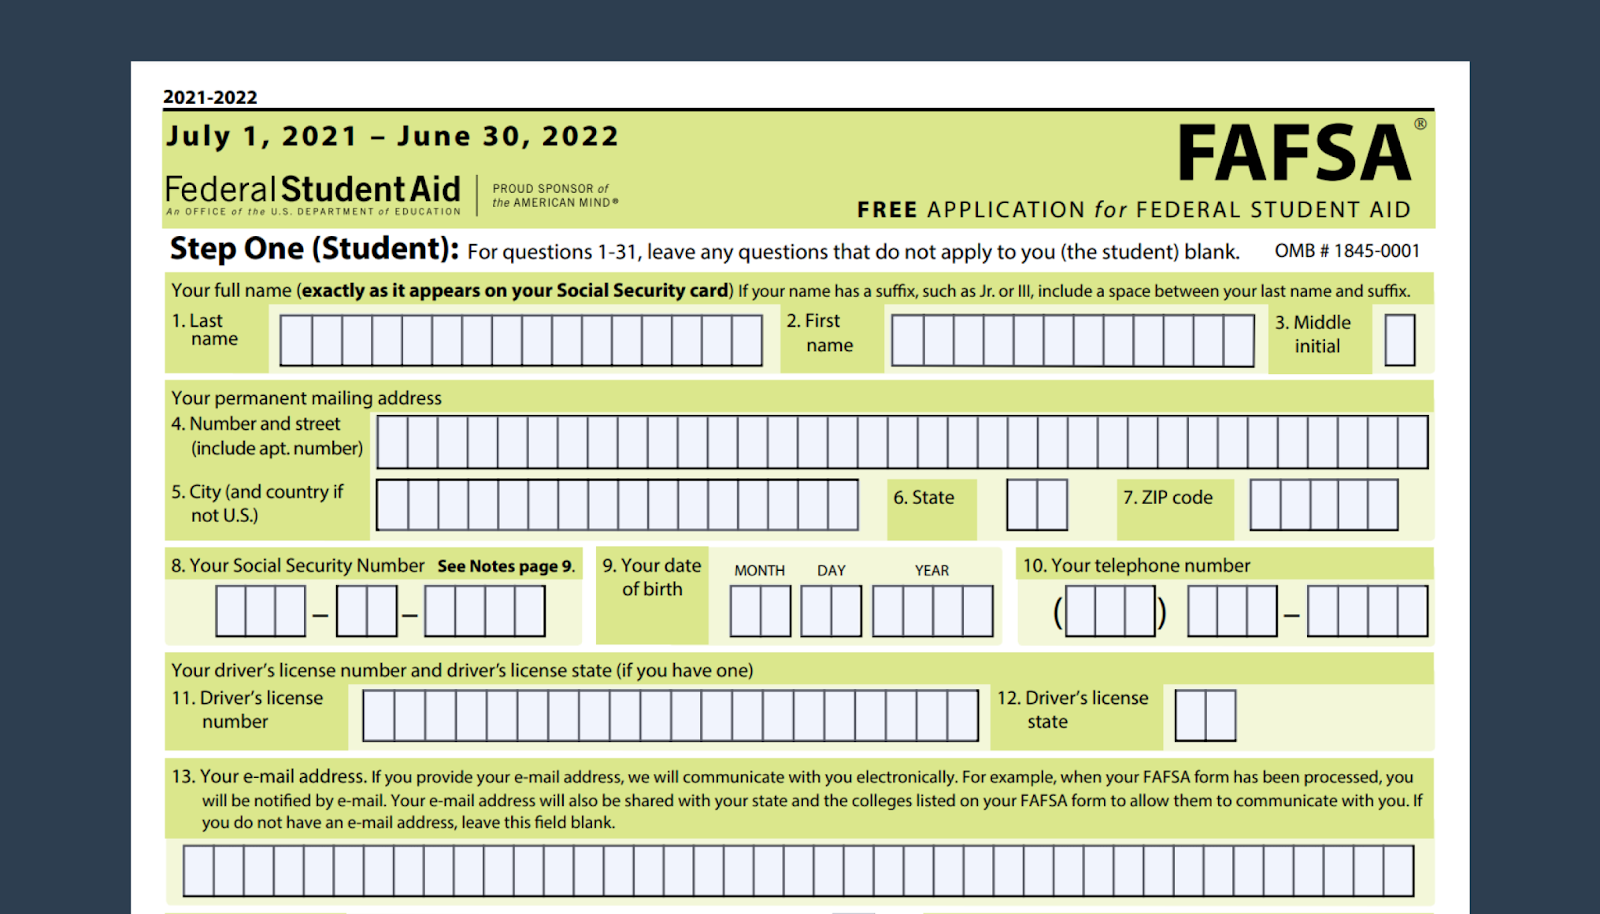 Illustration of FAFSA form